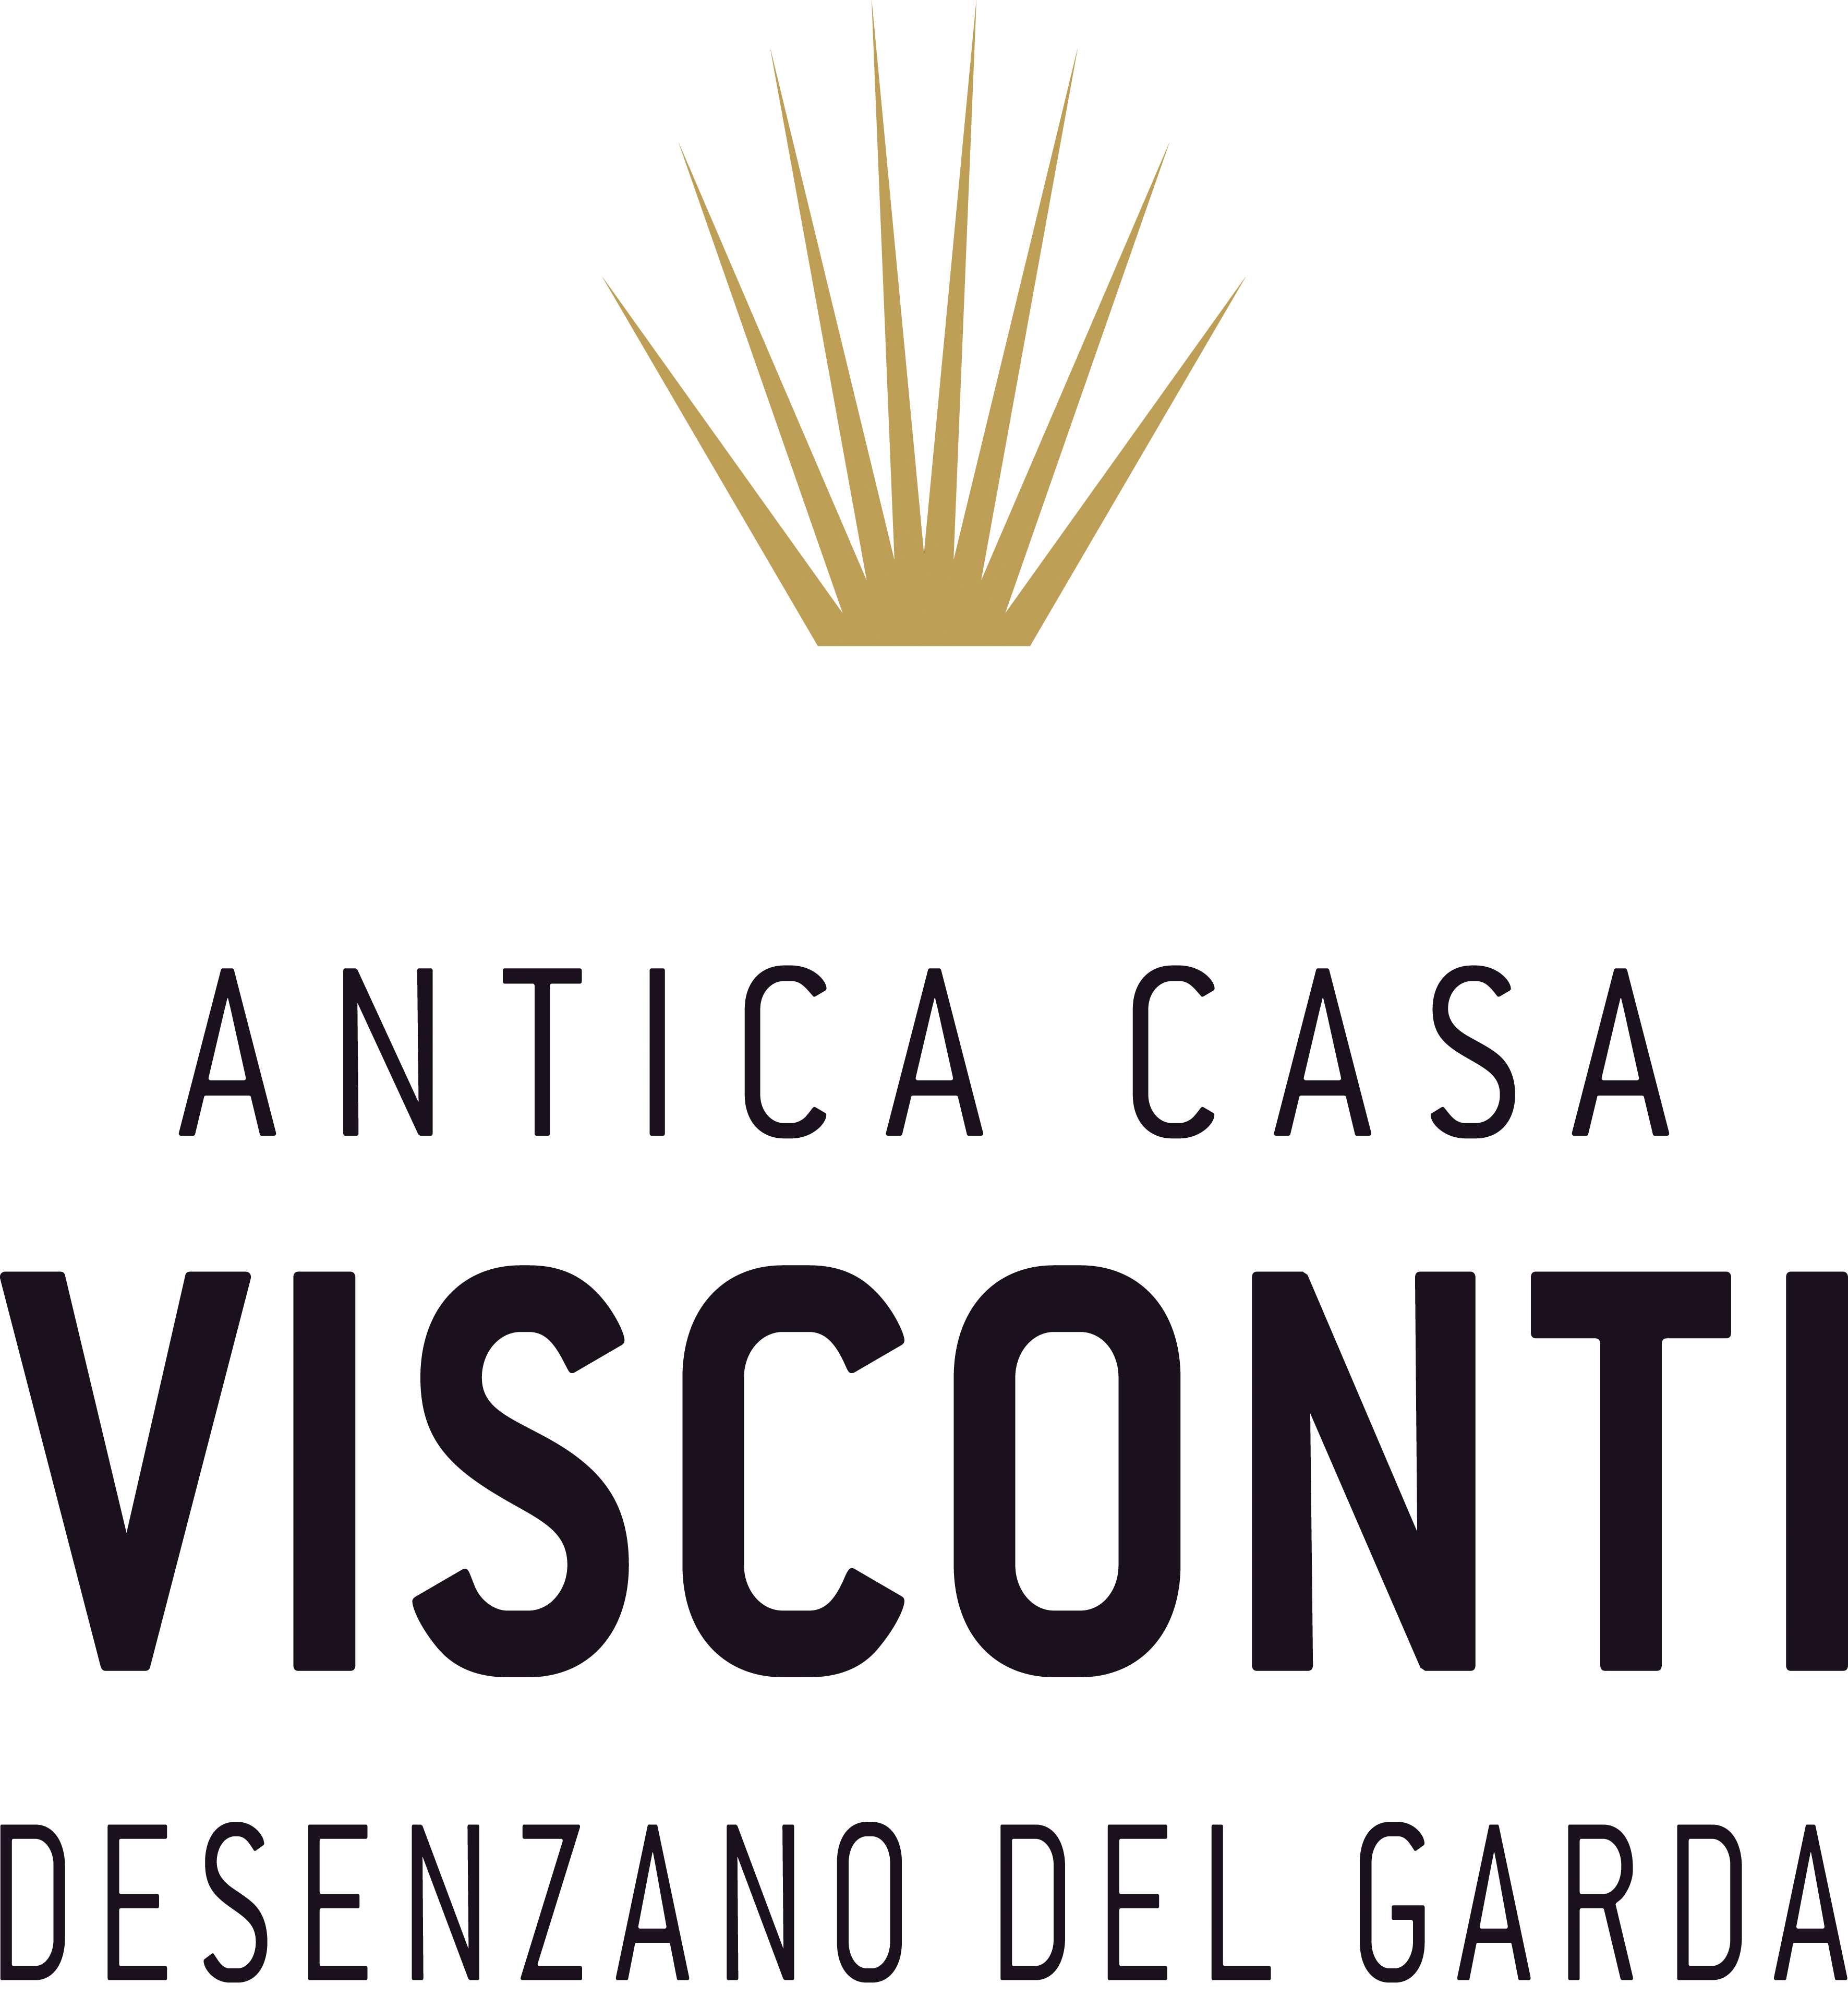 Visconti 